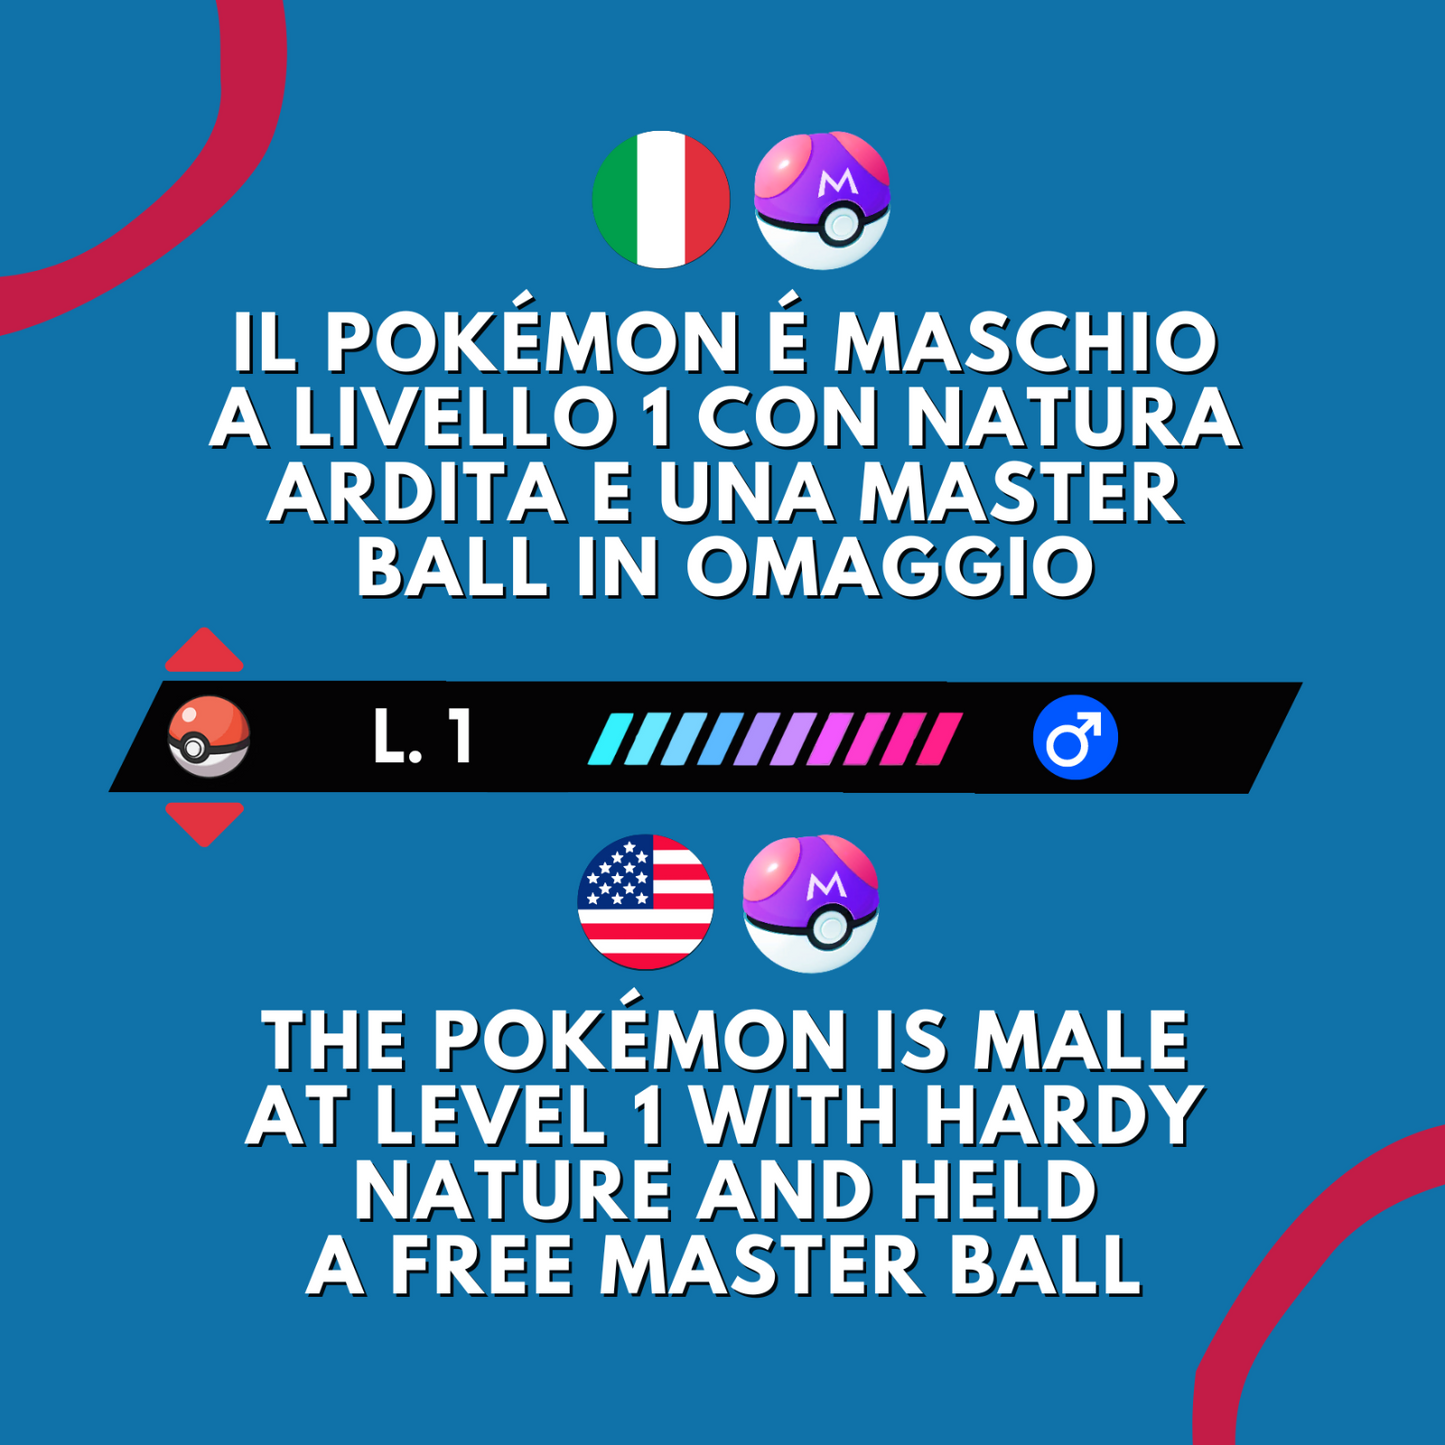 Bonsly Shiny o Non 6 IV e Master Ball Legit Pokemon Spada Scudo Sword Shield